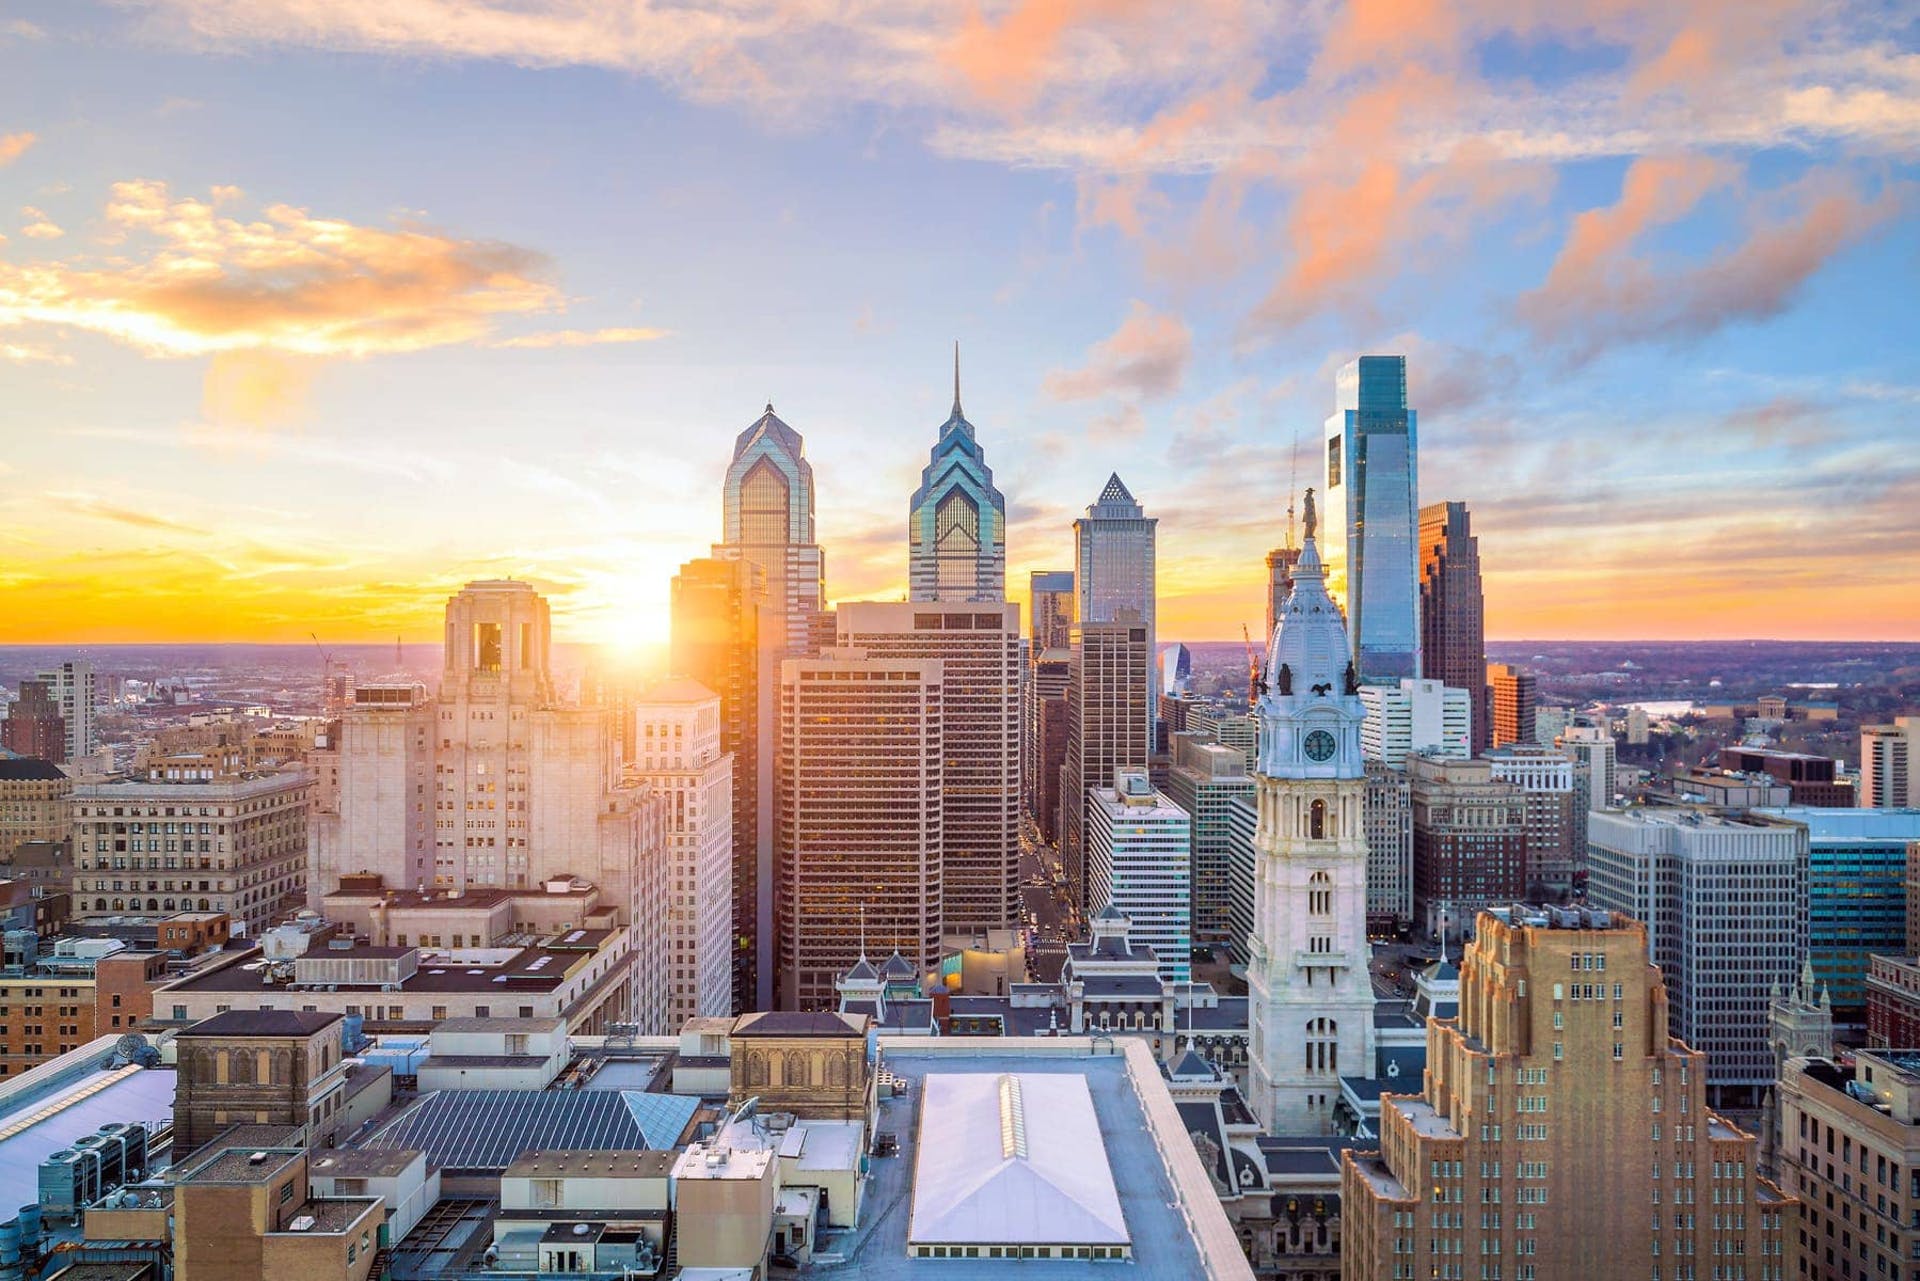 Top 10 non touristy things to do in Philadelphia